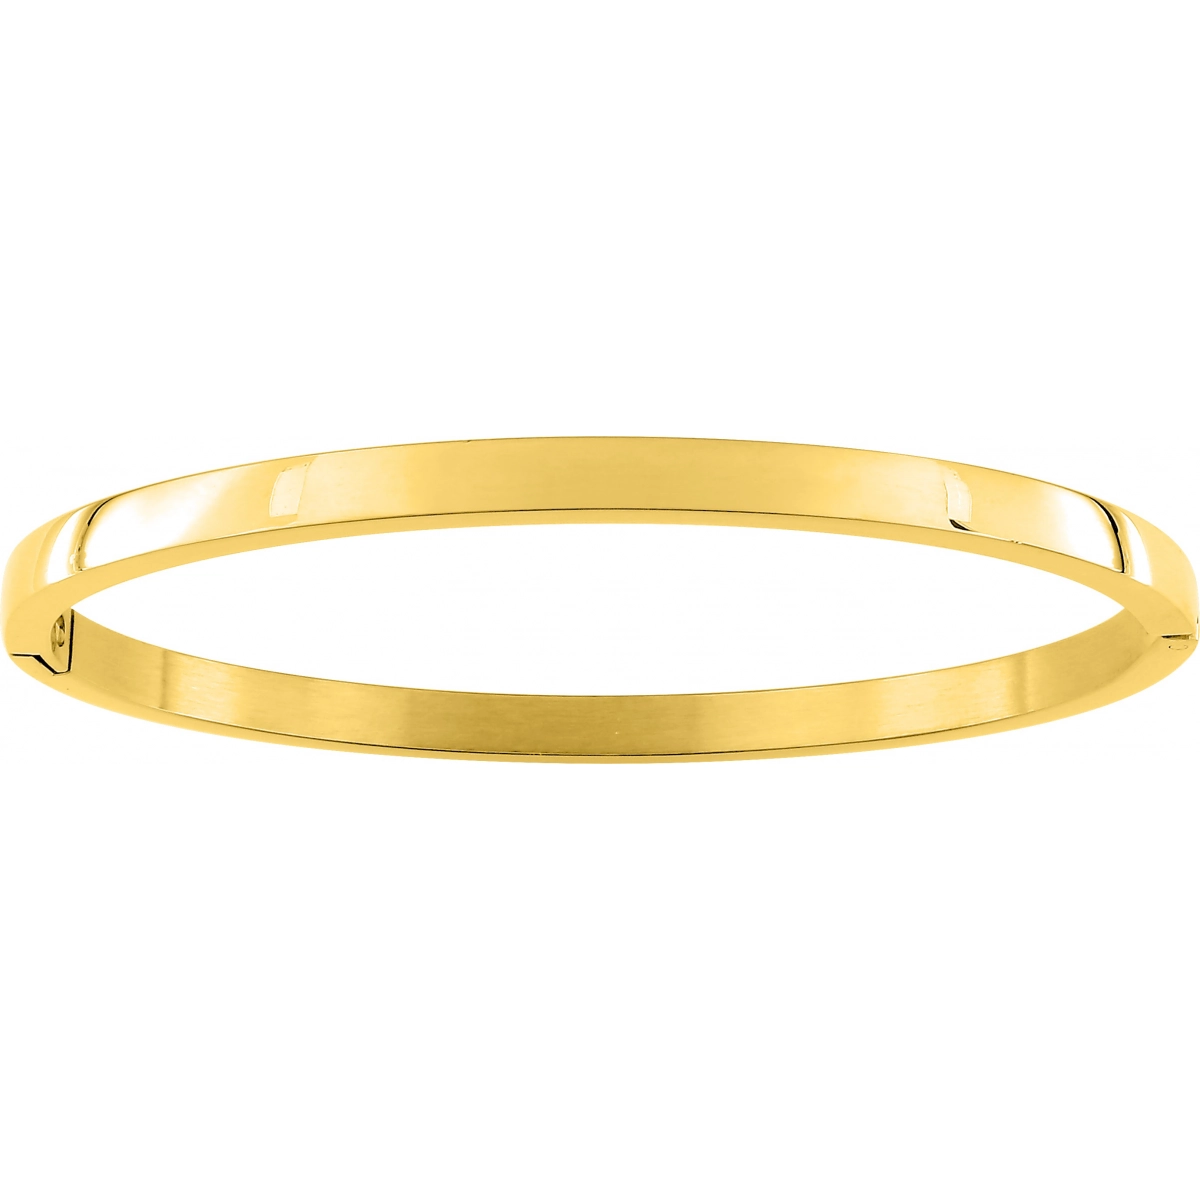 Bracelet gold colored st.Steel Lua Blanca  433690.0